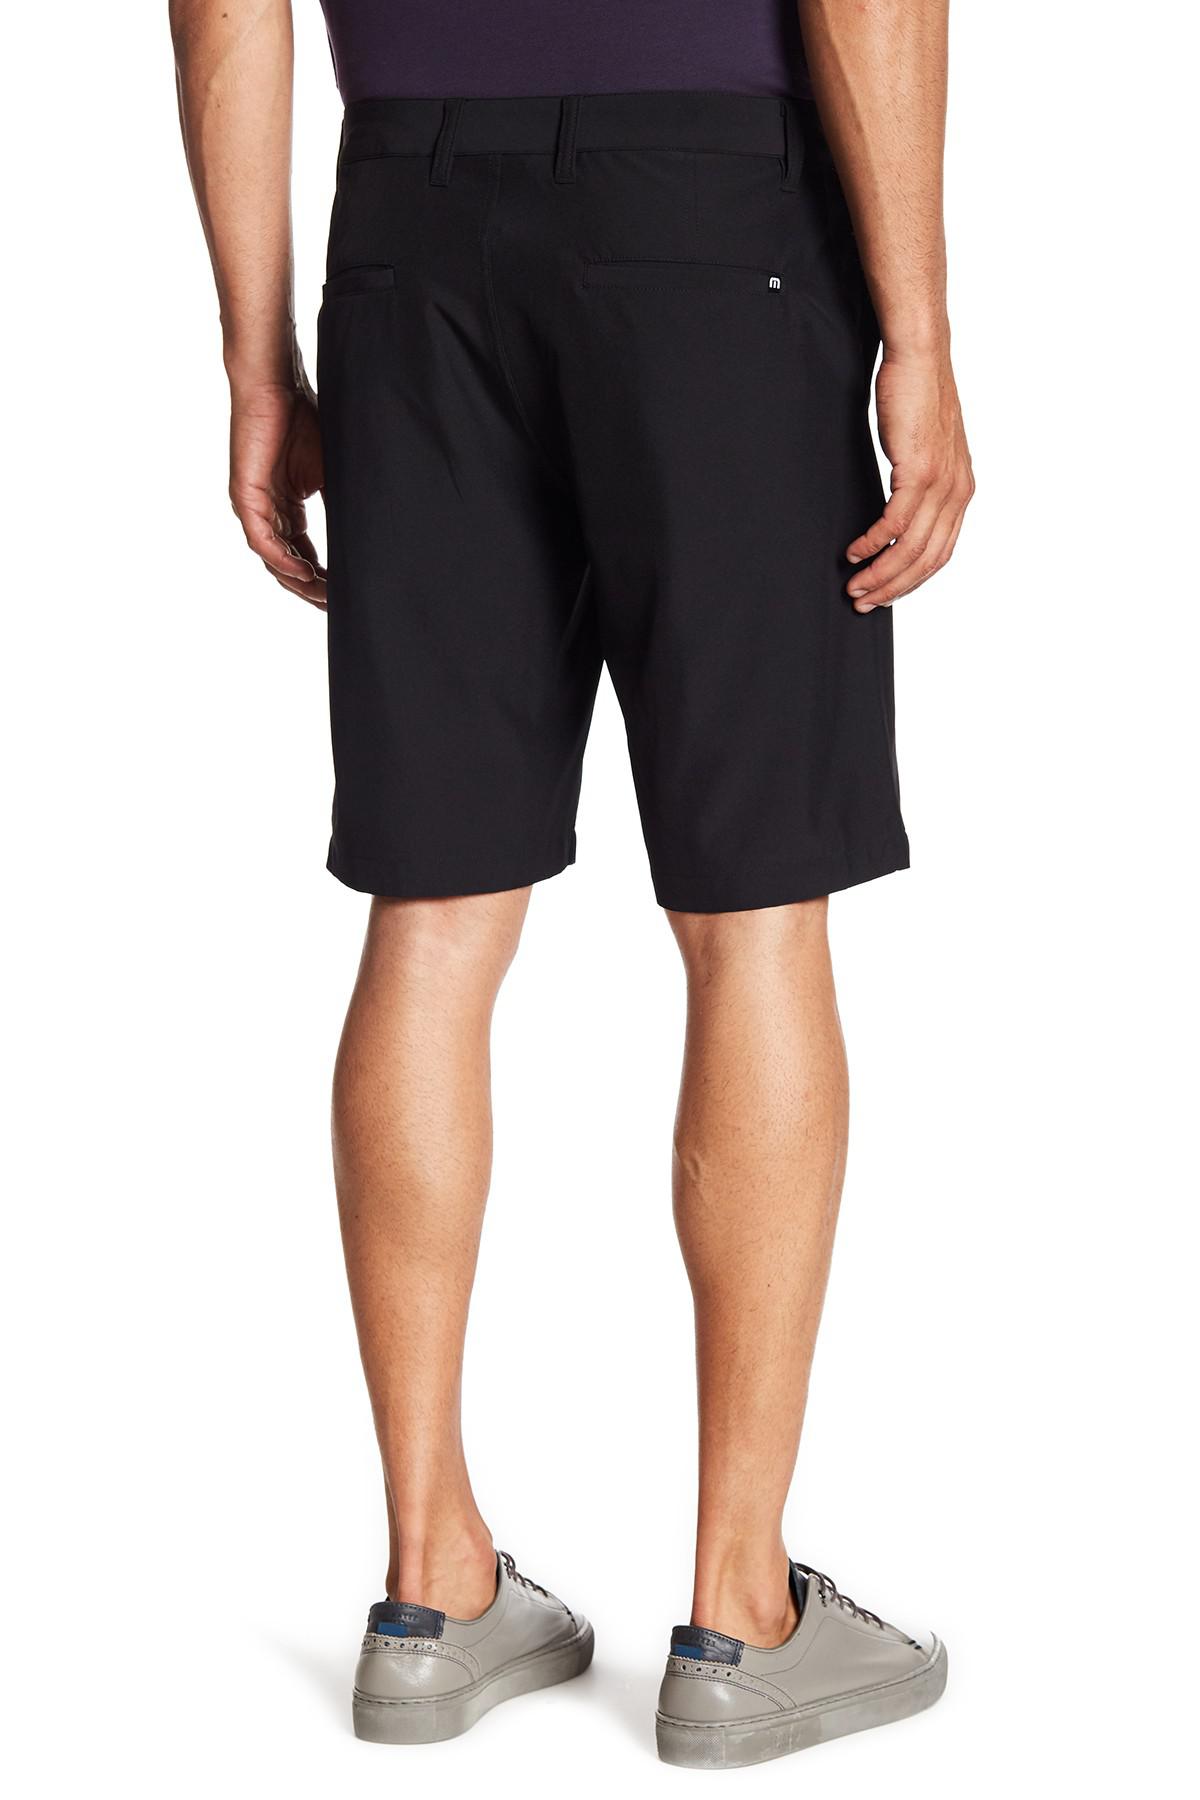 Travis Mathew Synthetic Spencer Jr Shorts in Black for Men - Lyst